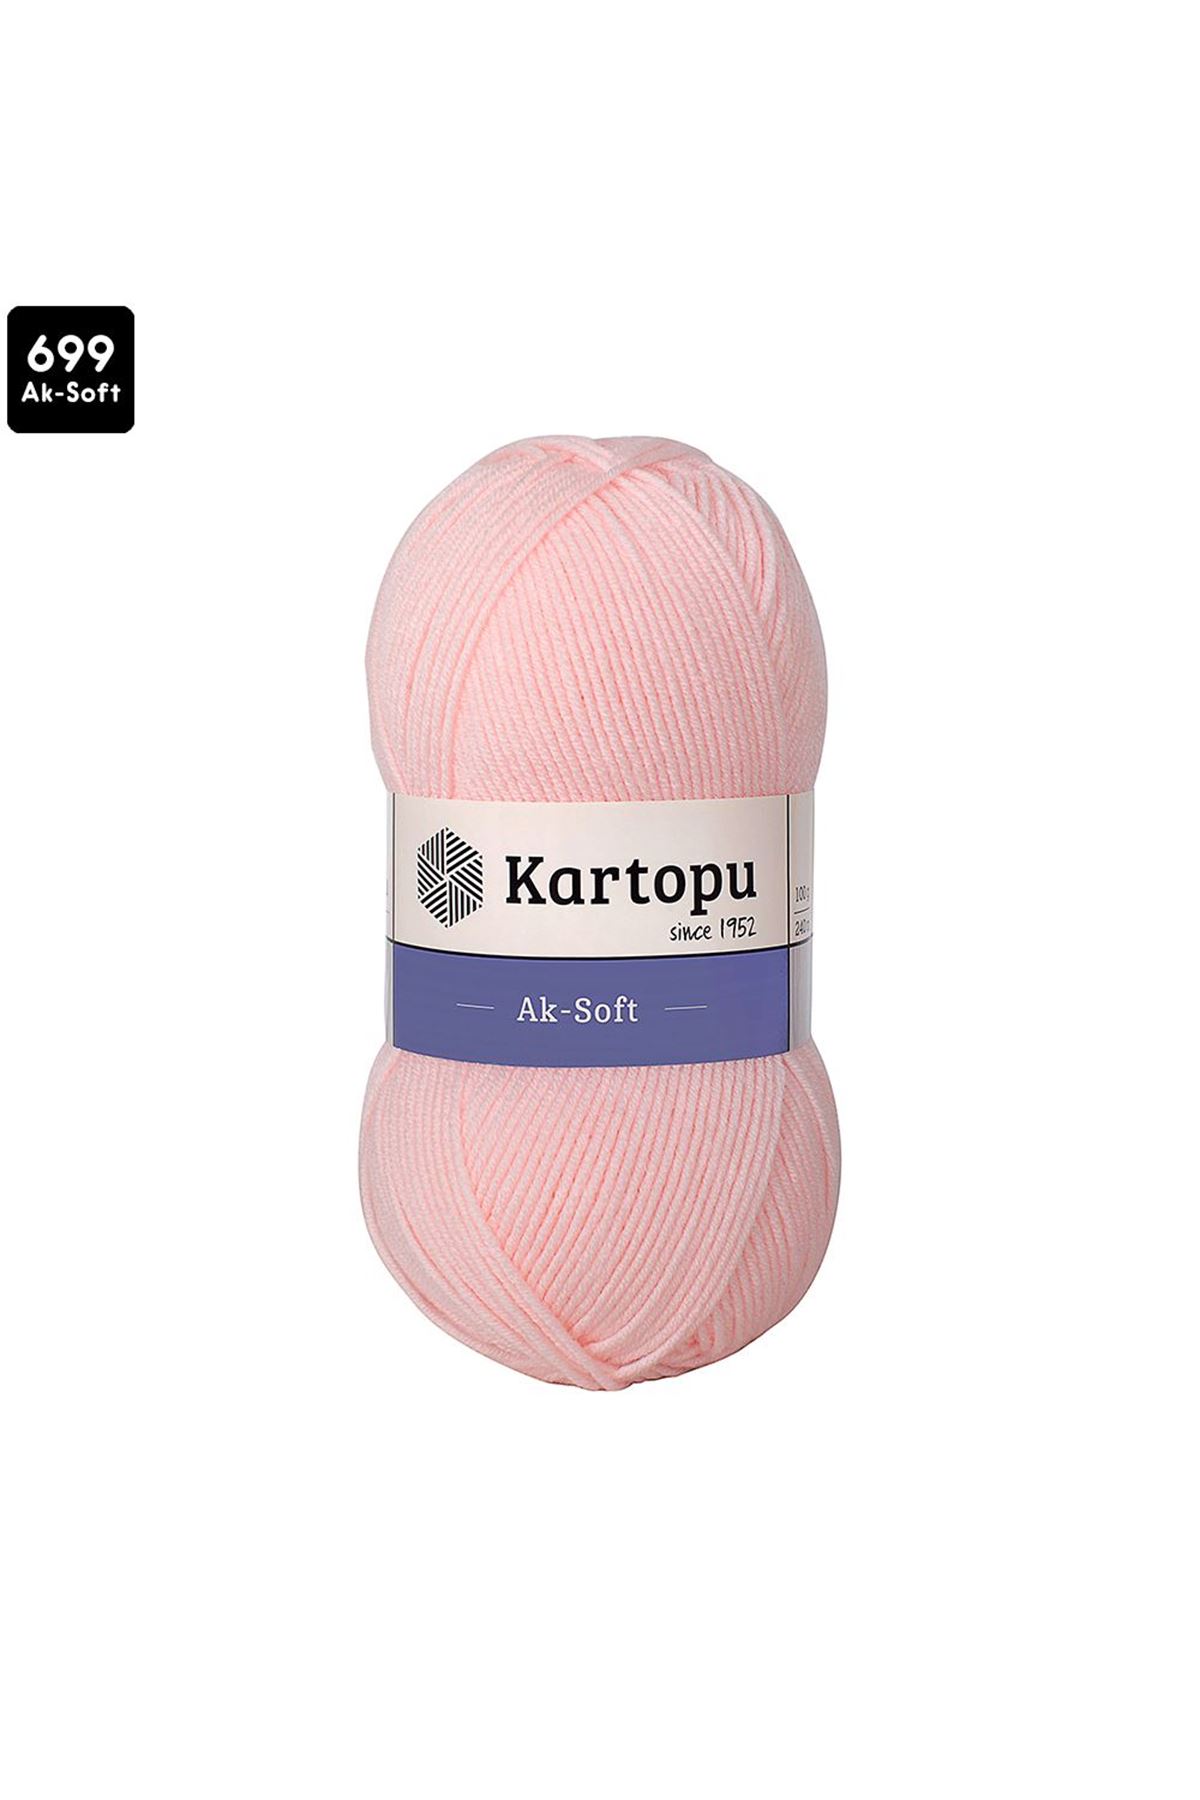 Kartopu Ak-Soft Renk No:699